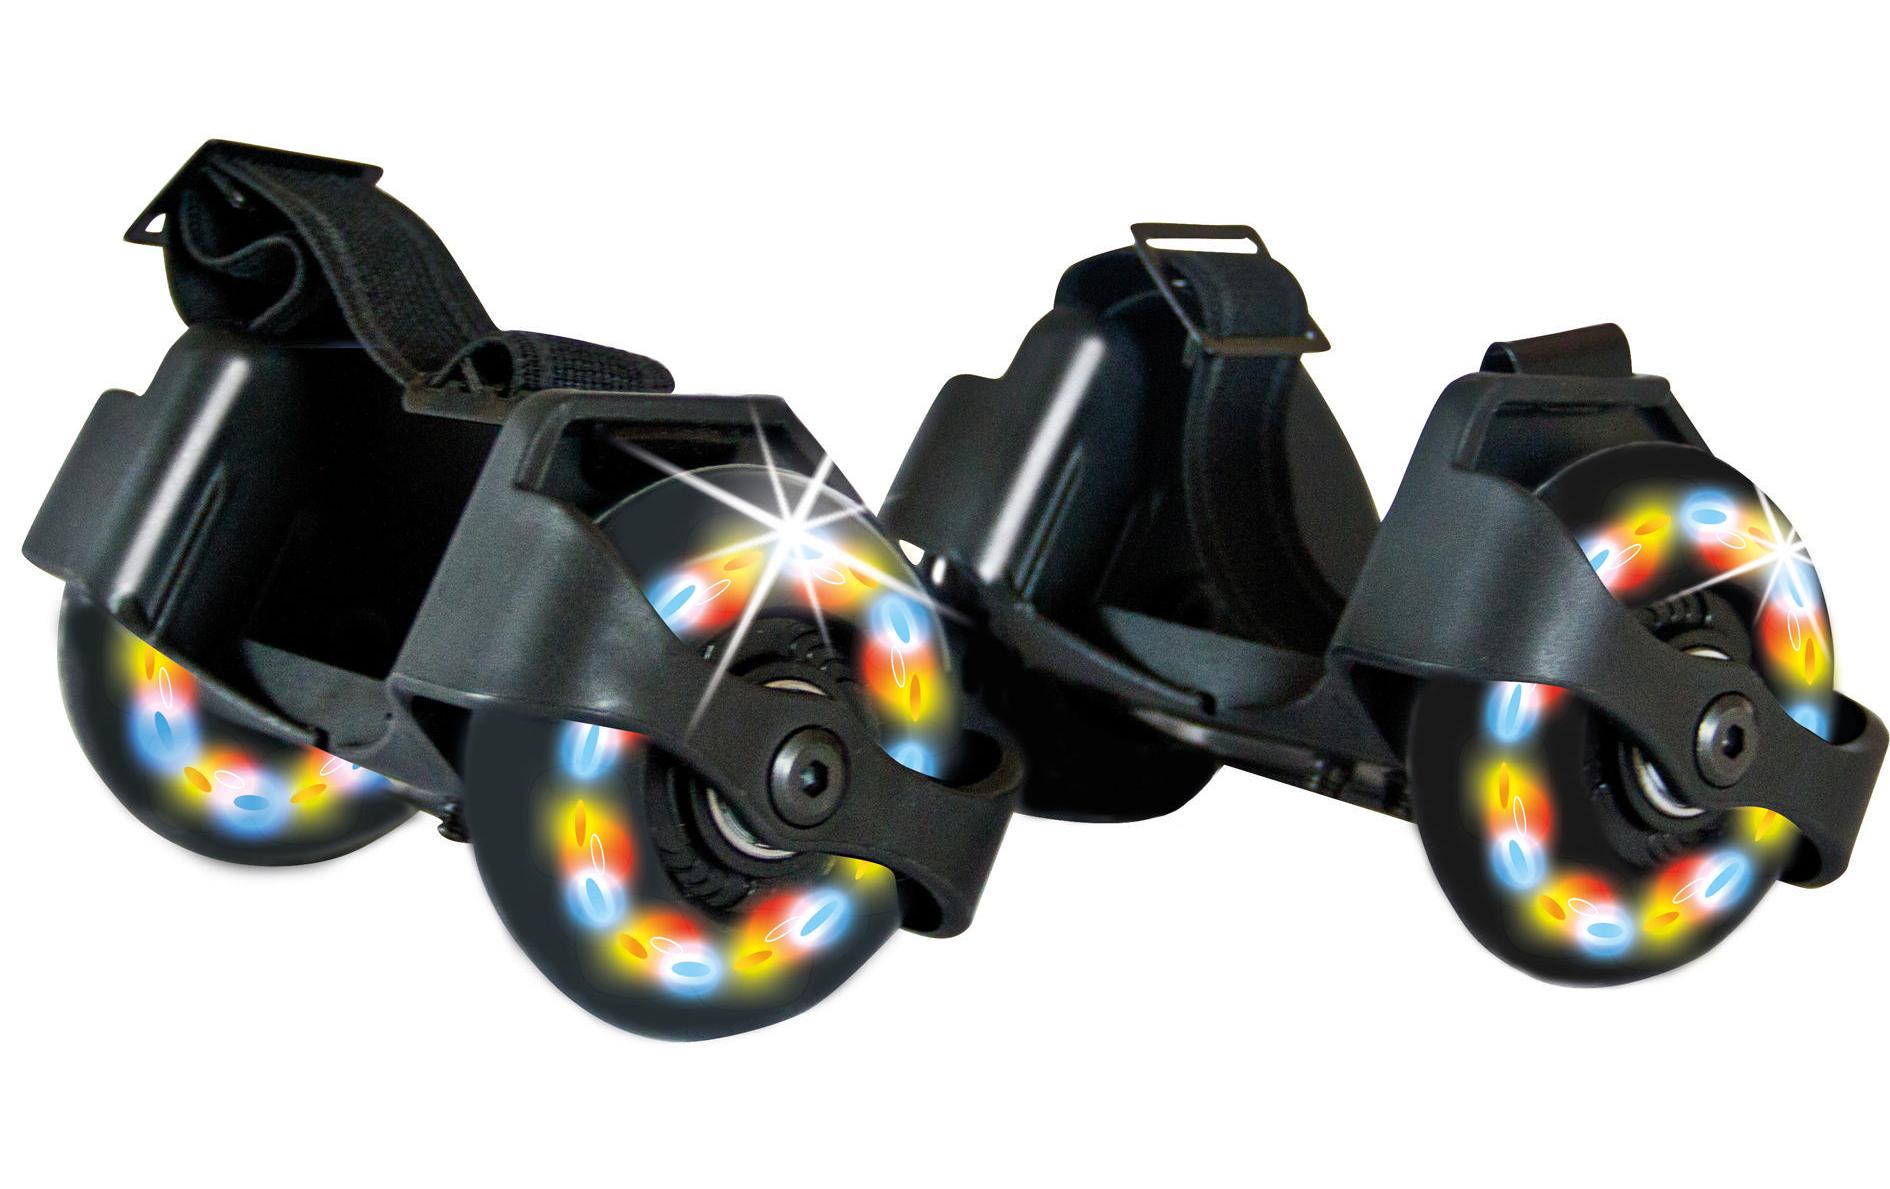 Schildkröt Funsports Rollschuhe Flashy Rollers LED